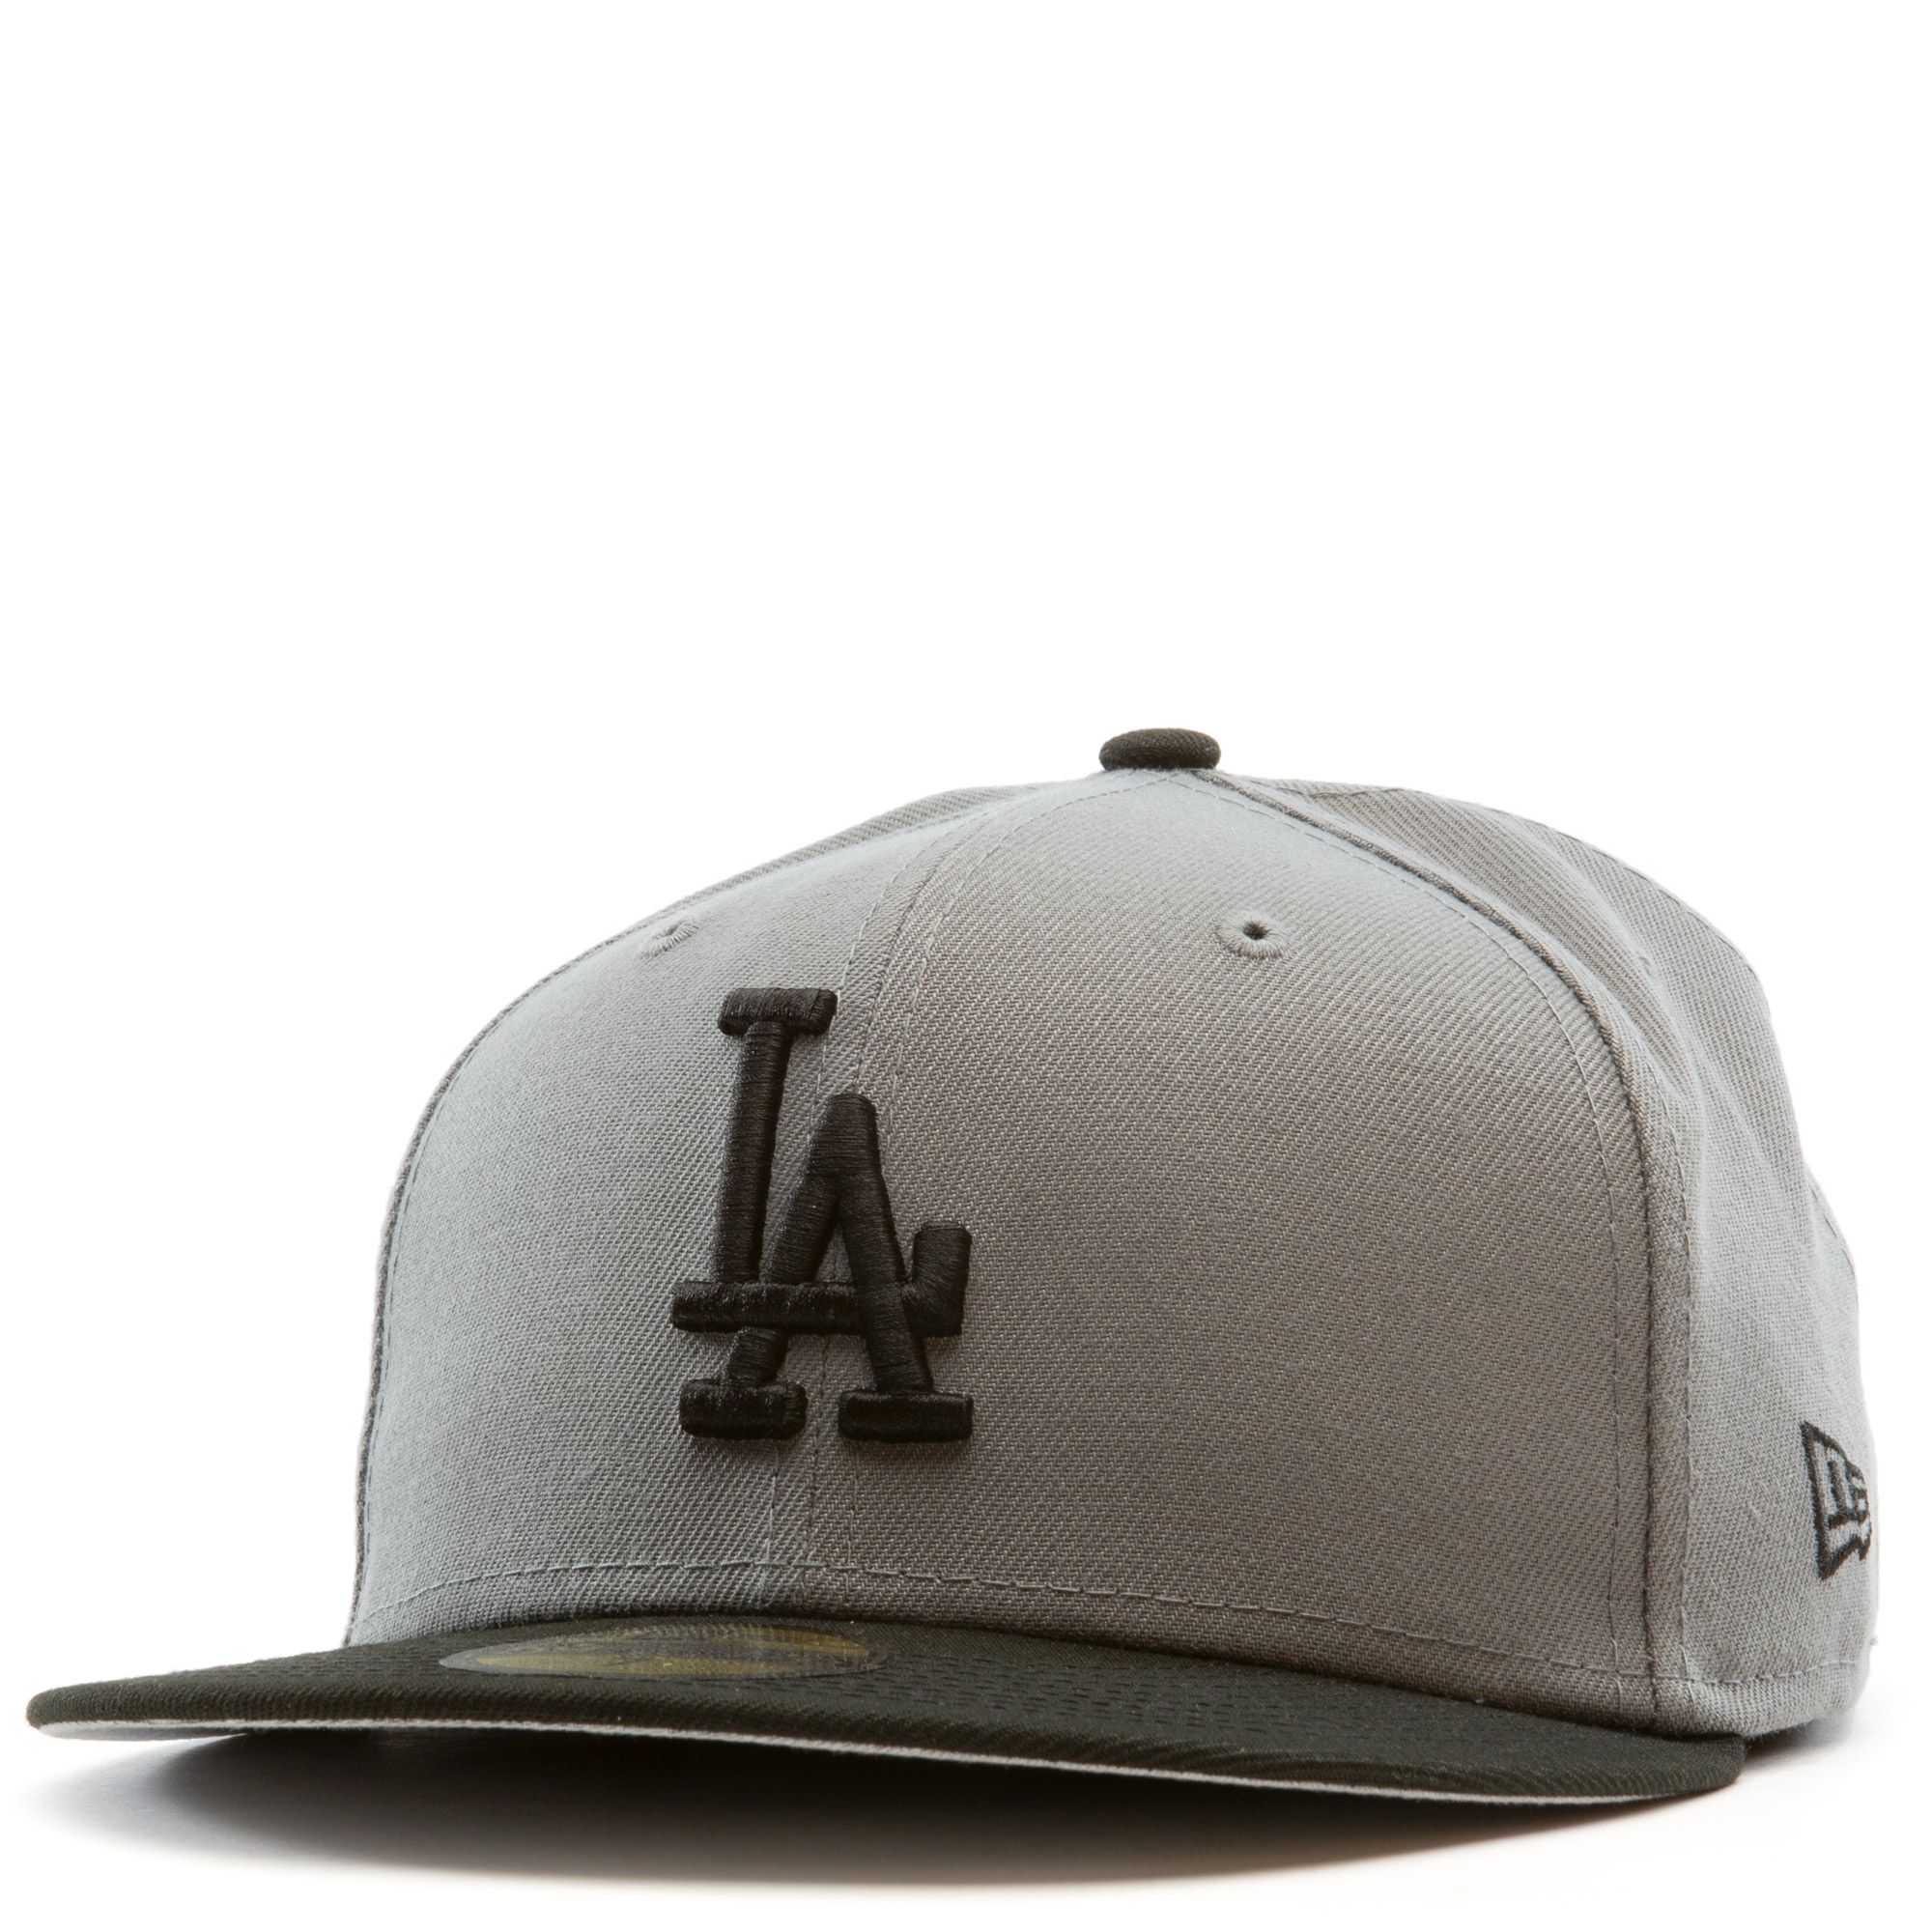 Dodgers 'TEAM-BASIC SNAPBACK' Grey-Black Hats by New Era 